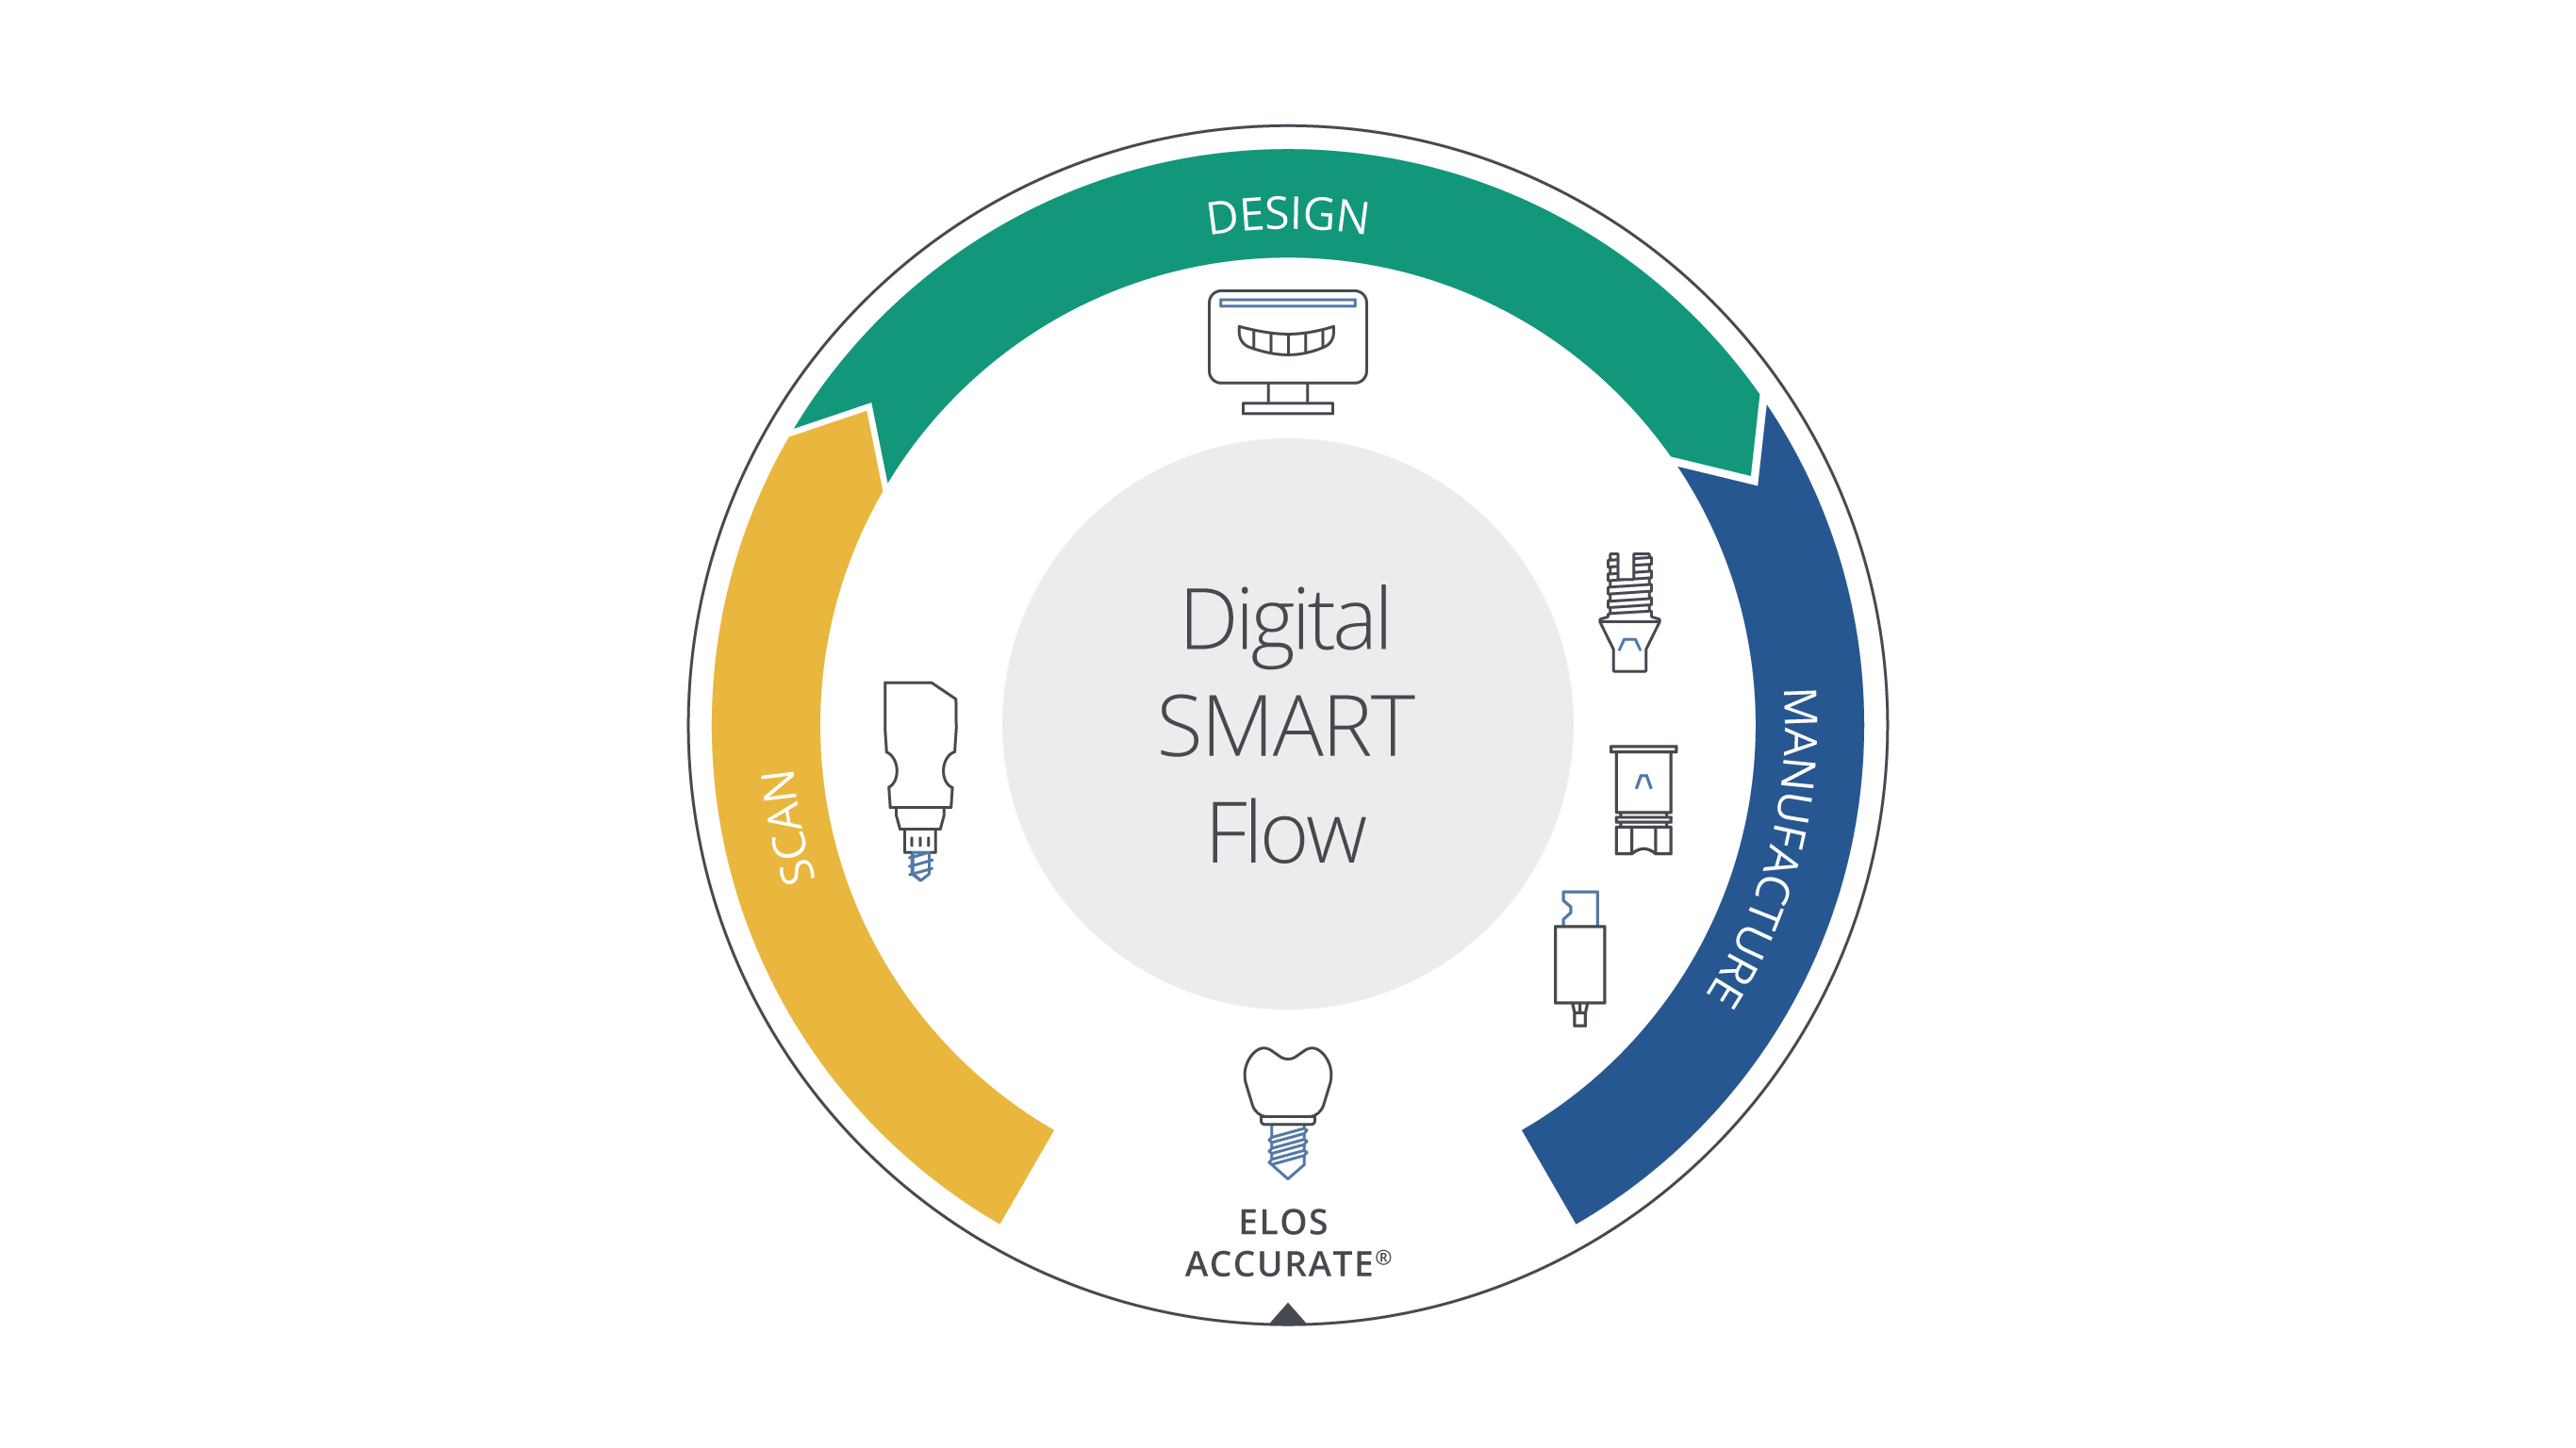 Elos digital smart flow chart artboard 3 copy 8 2x